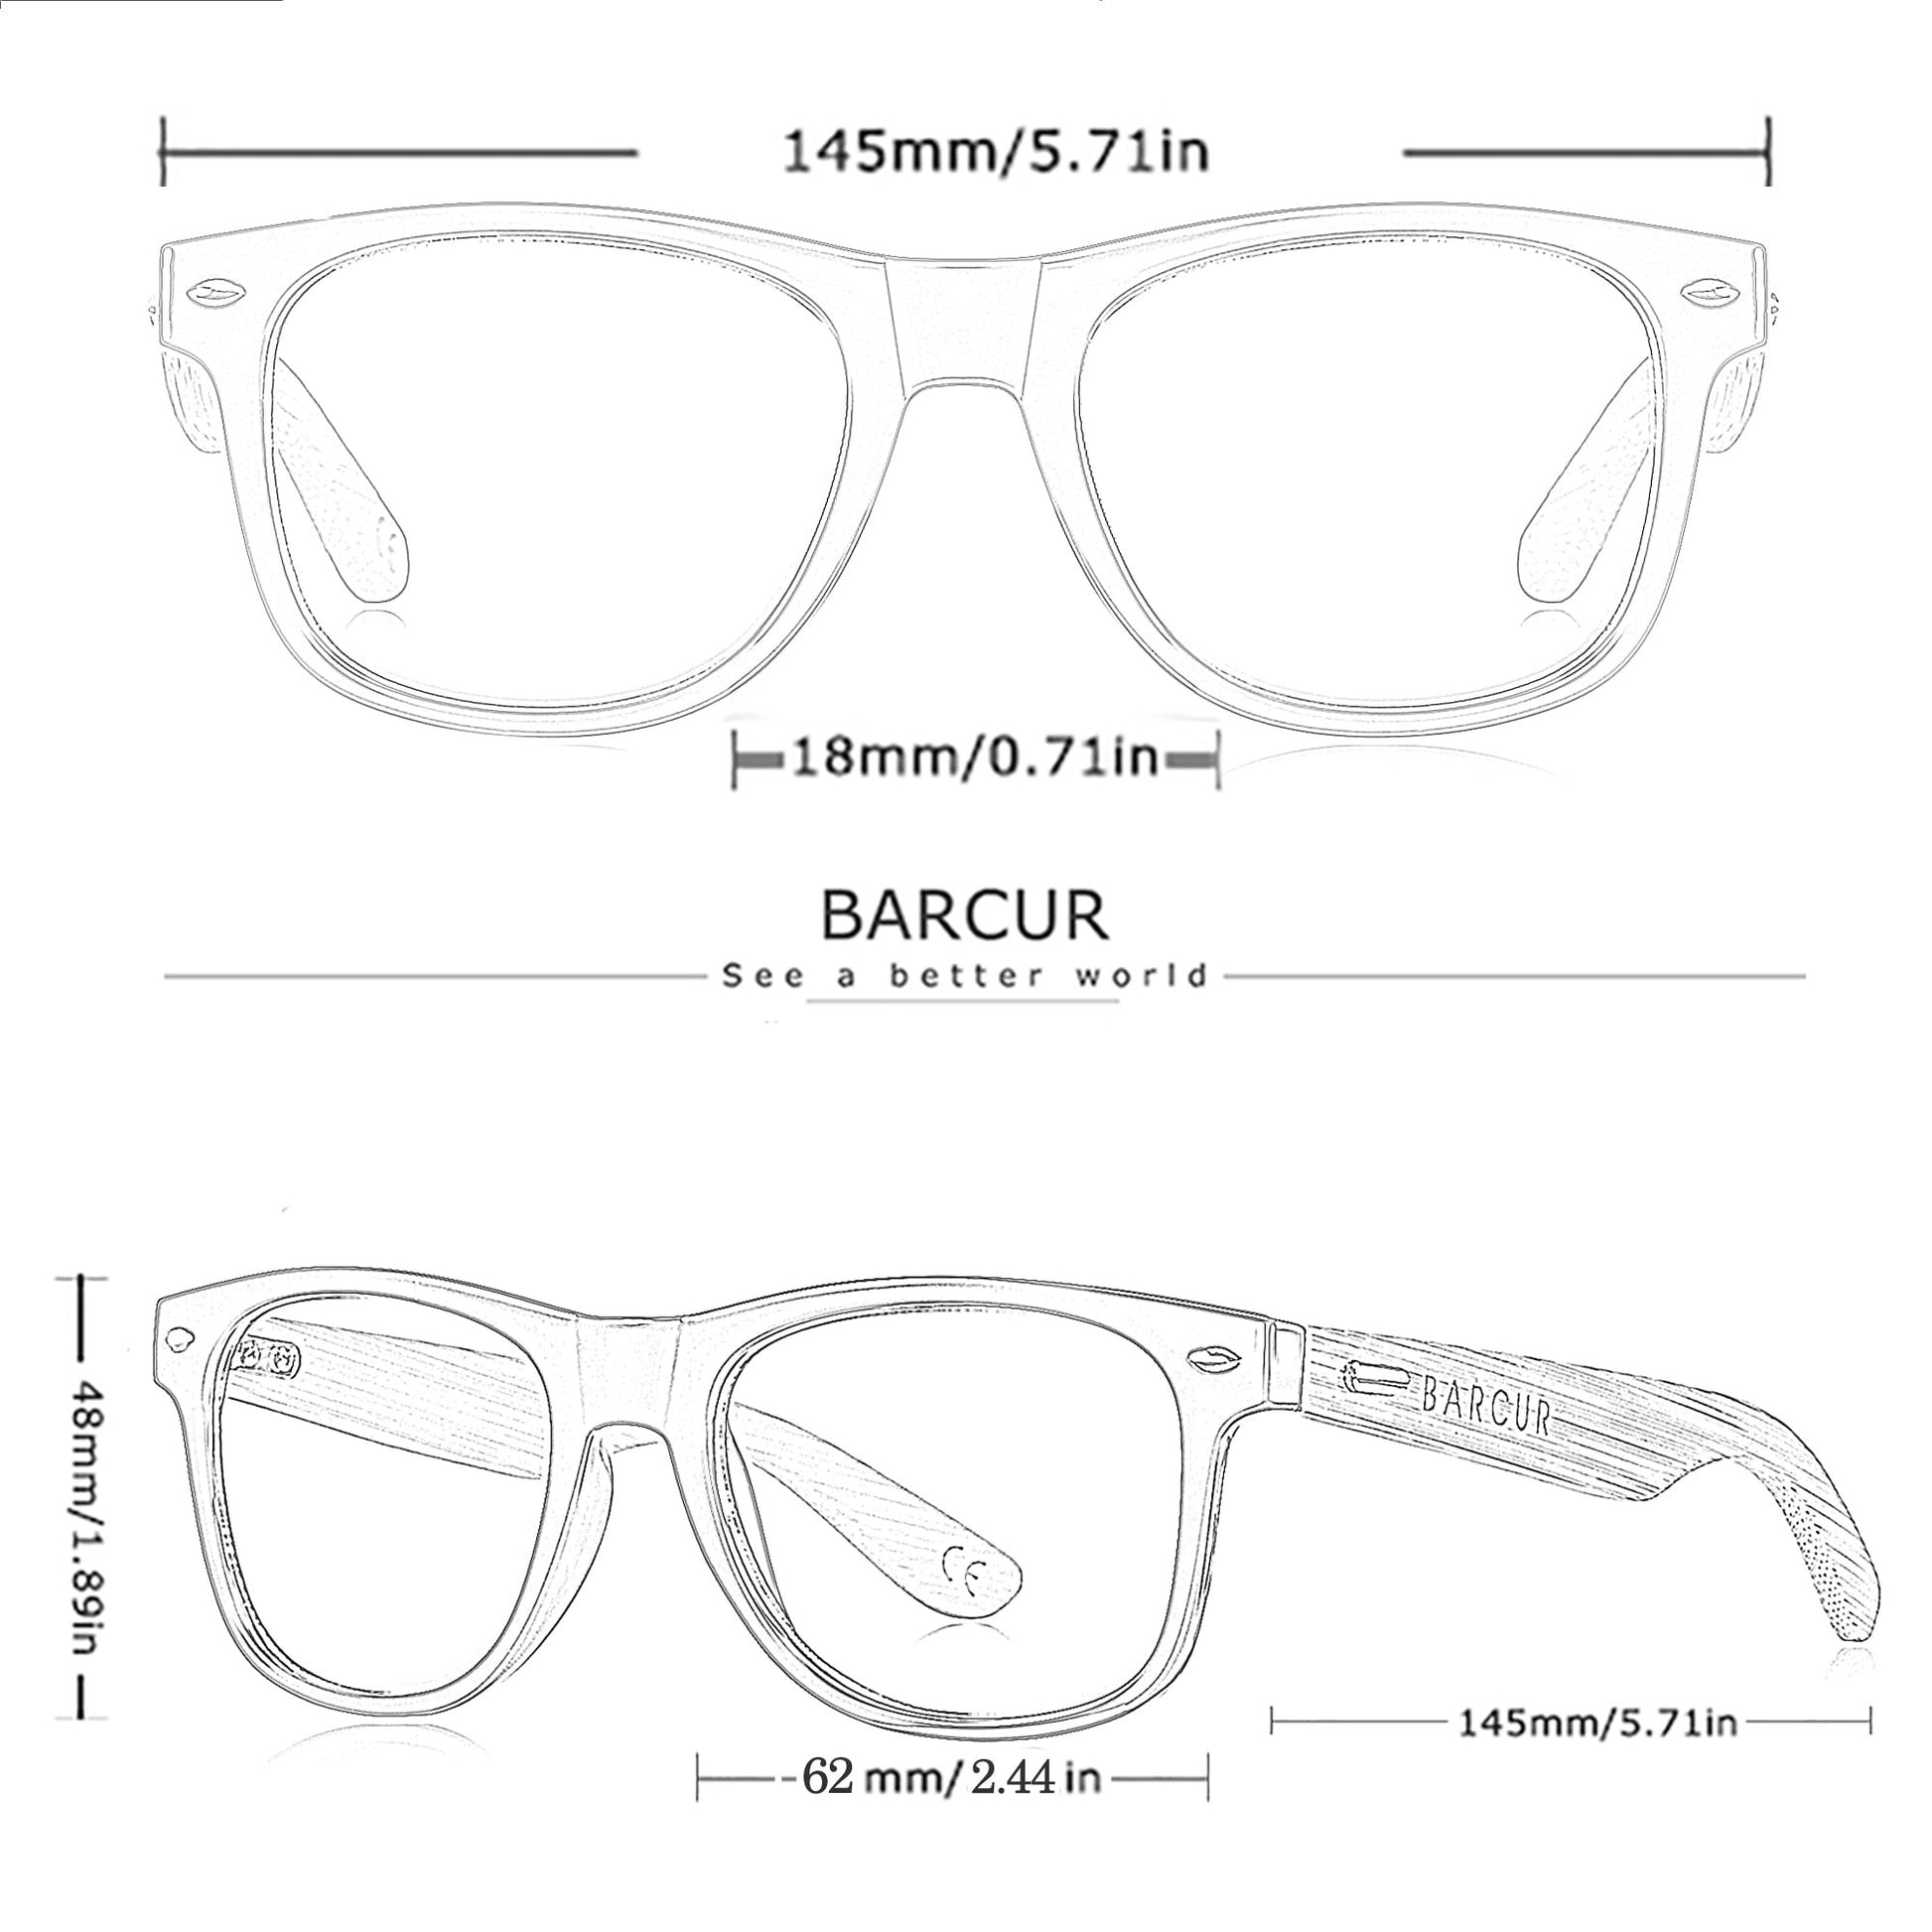 Barcur Polarised Bamboo sunglasses product dimensions